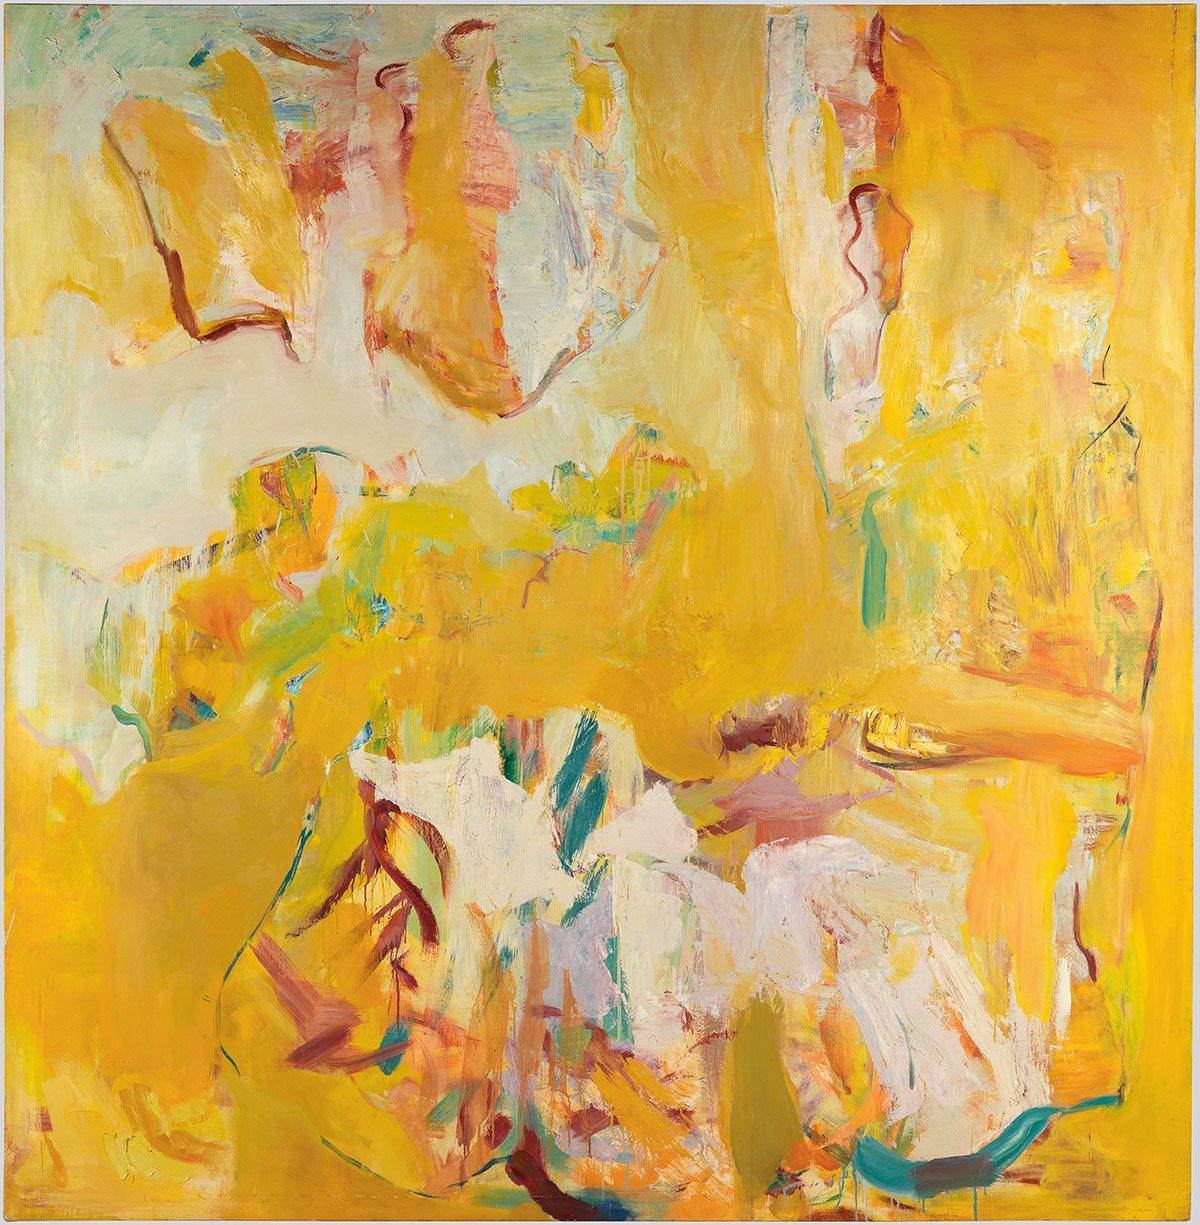 Shirley Jaffe, Arceuil Yellow, 1956